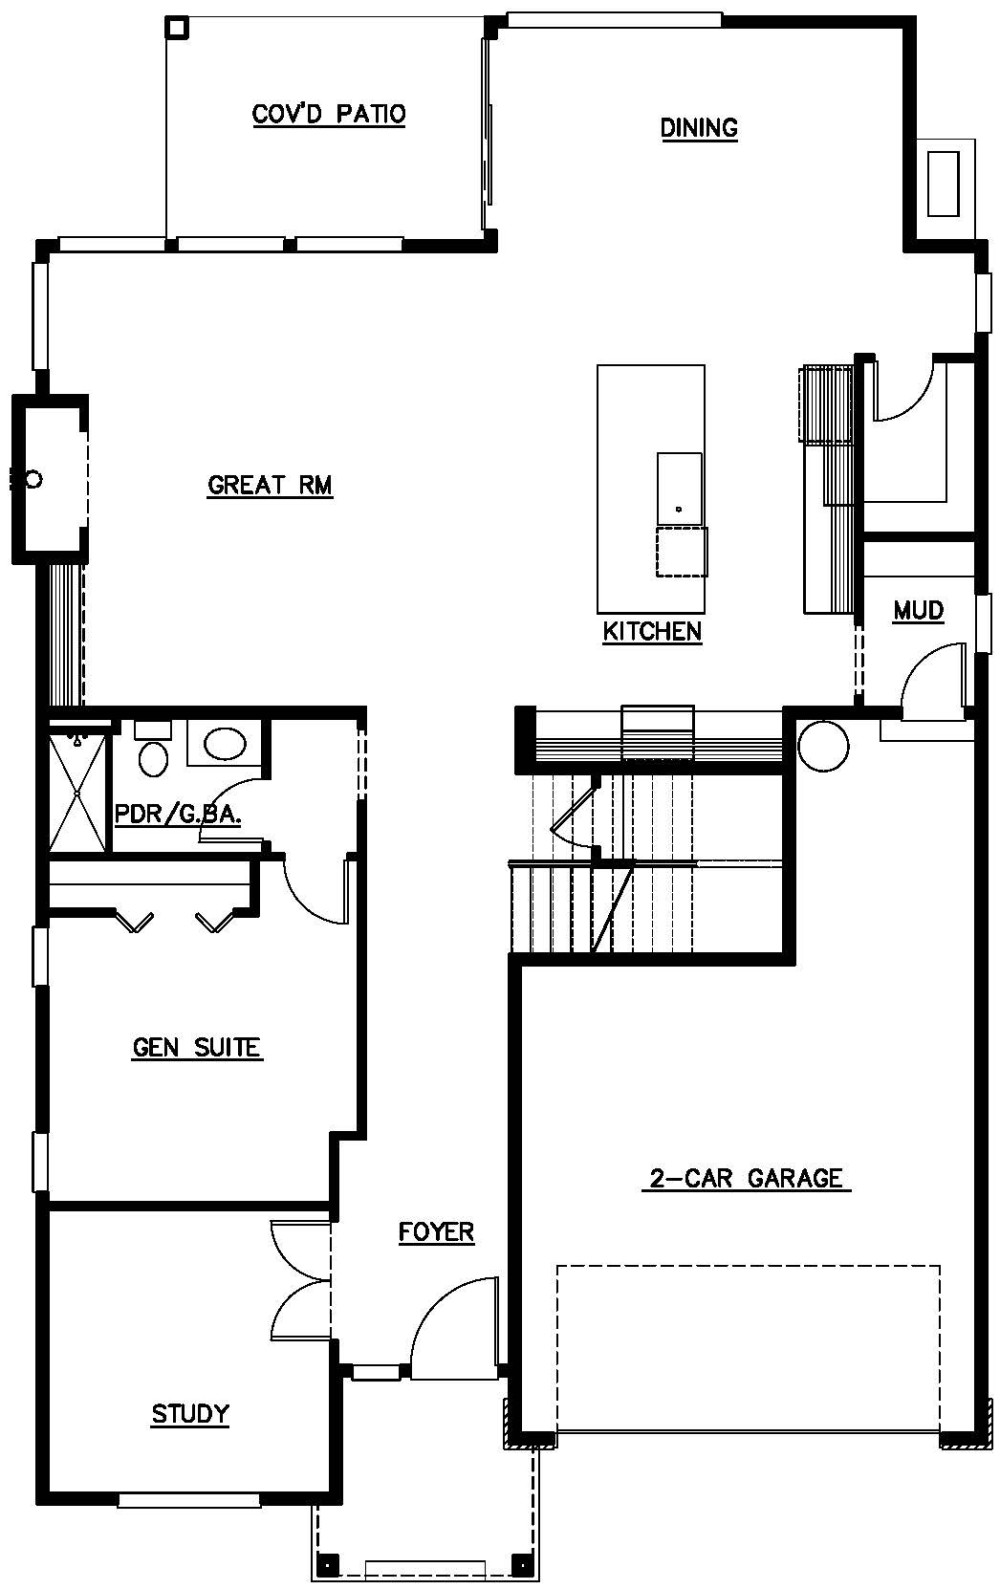 Main Floor Plan floorplan for the Chelan - Lot 4 home